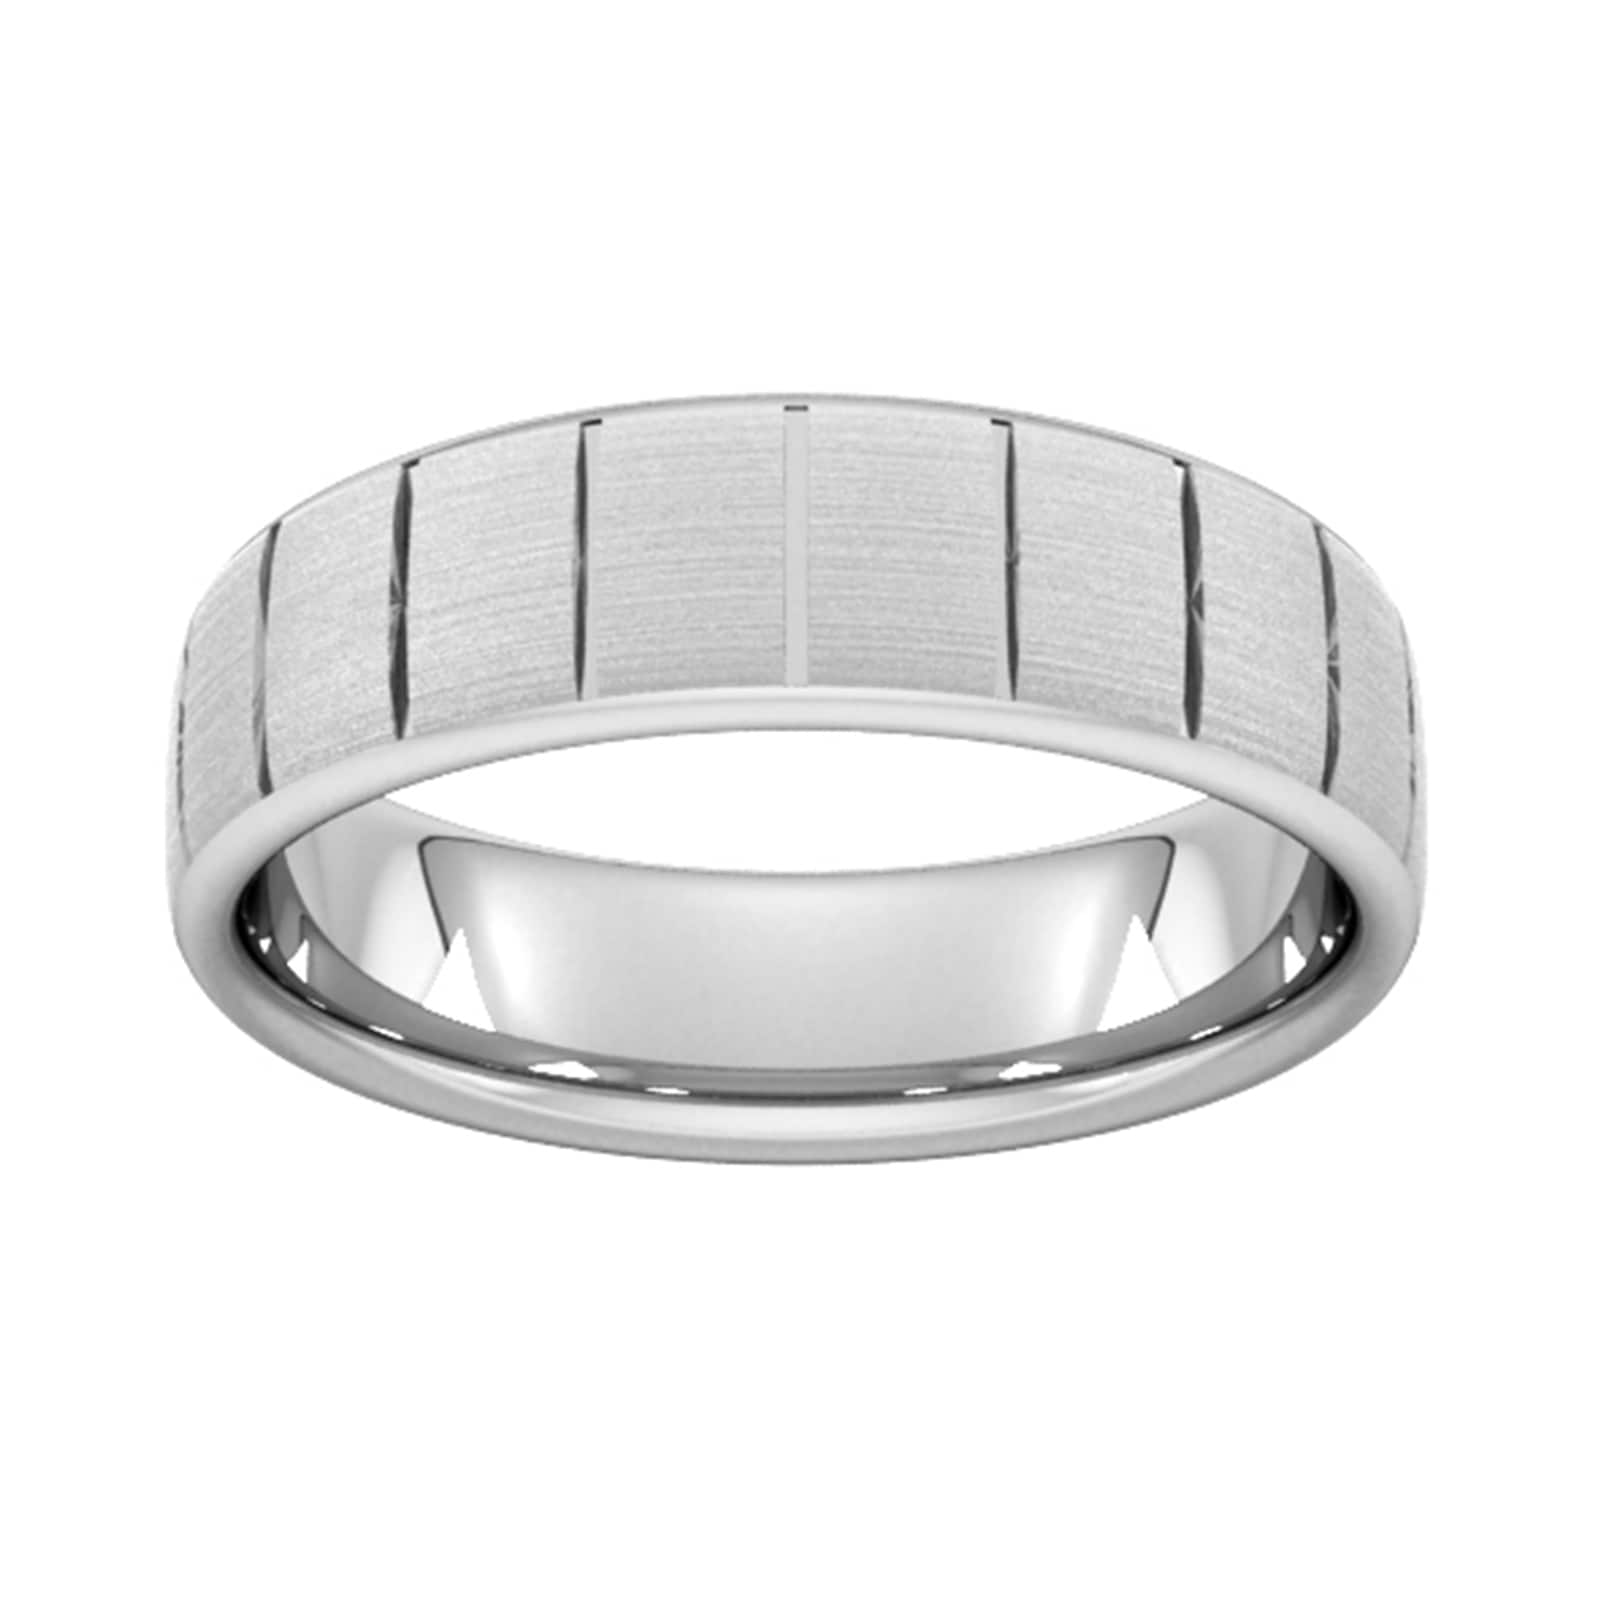 6mm Slight Court Heavy Vertical Lines Wedding Ring In 950 Palladium - Ring Size N